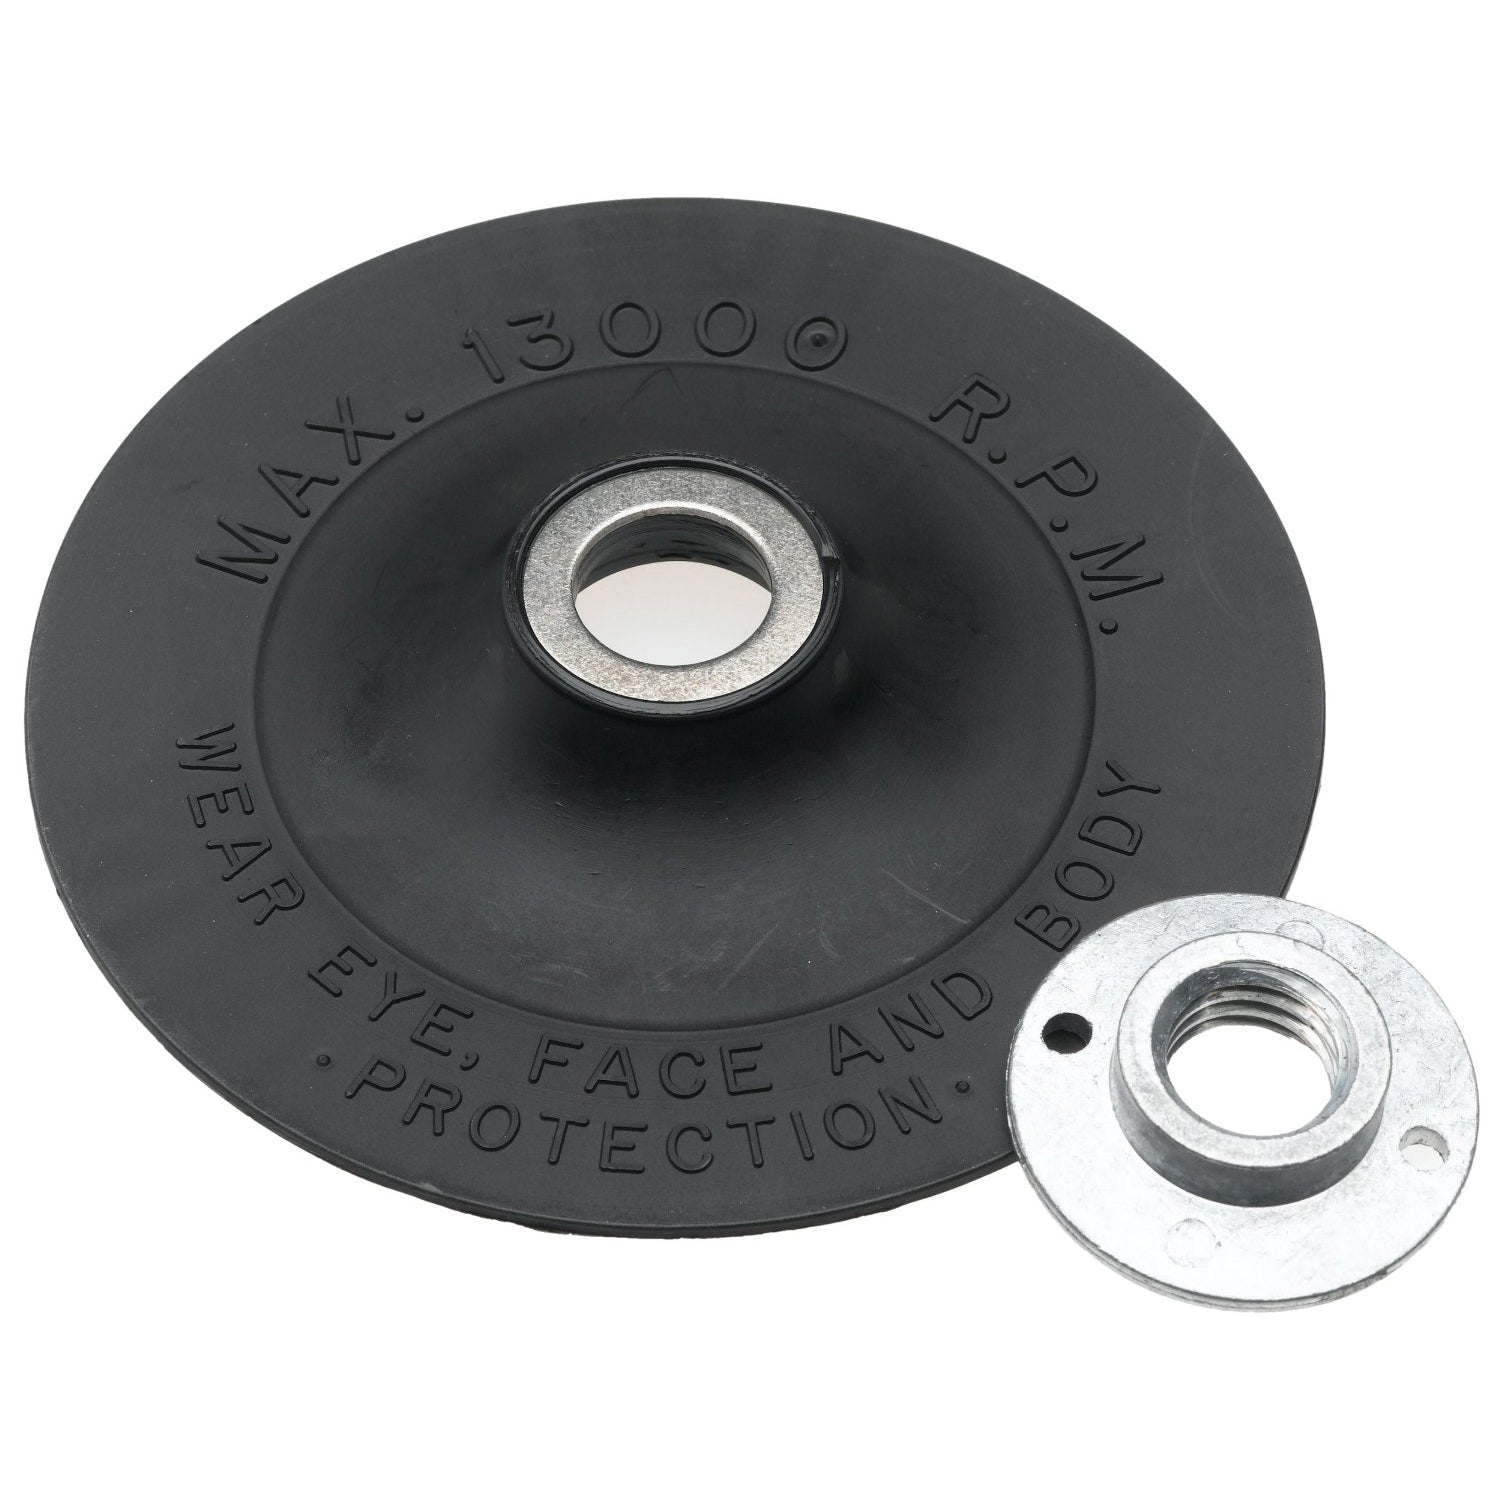 Bosch Mg0450 4 1 2 Inch 12 500 Rpm Lock Nut Sander Rubber Backing